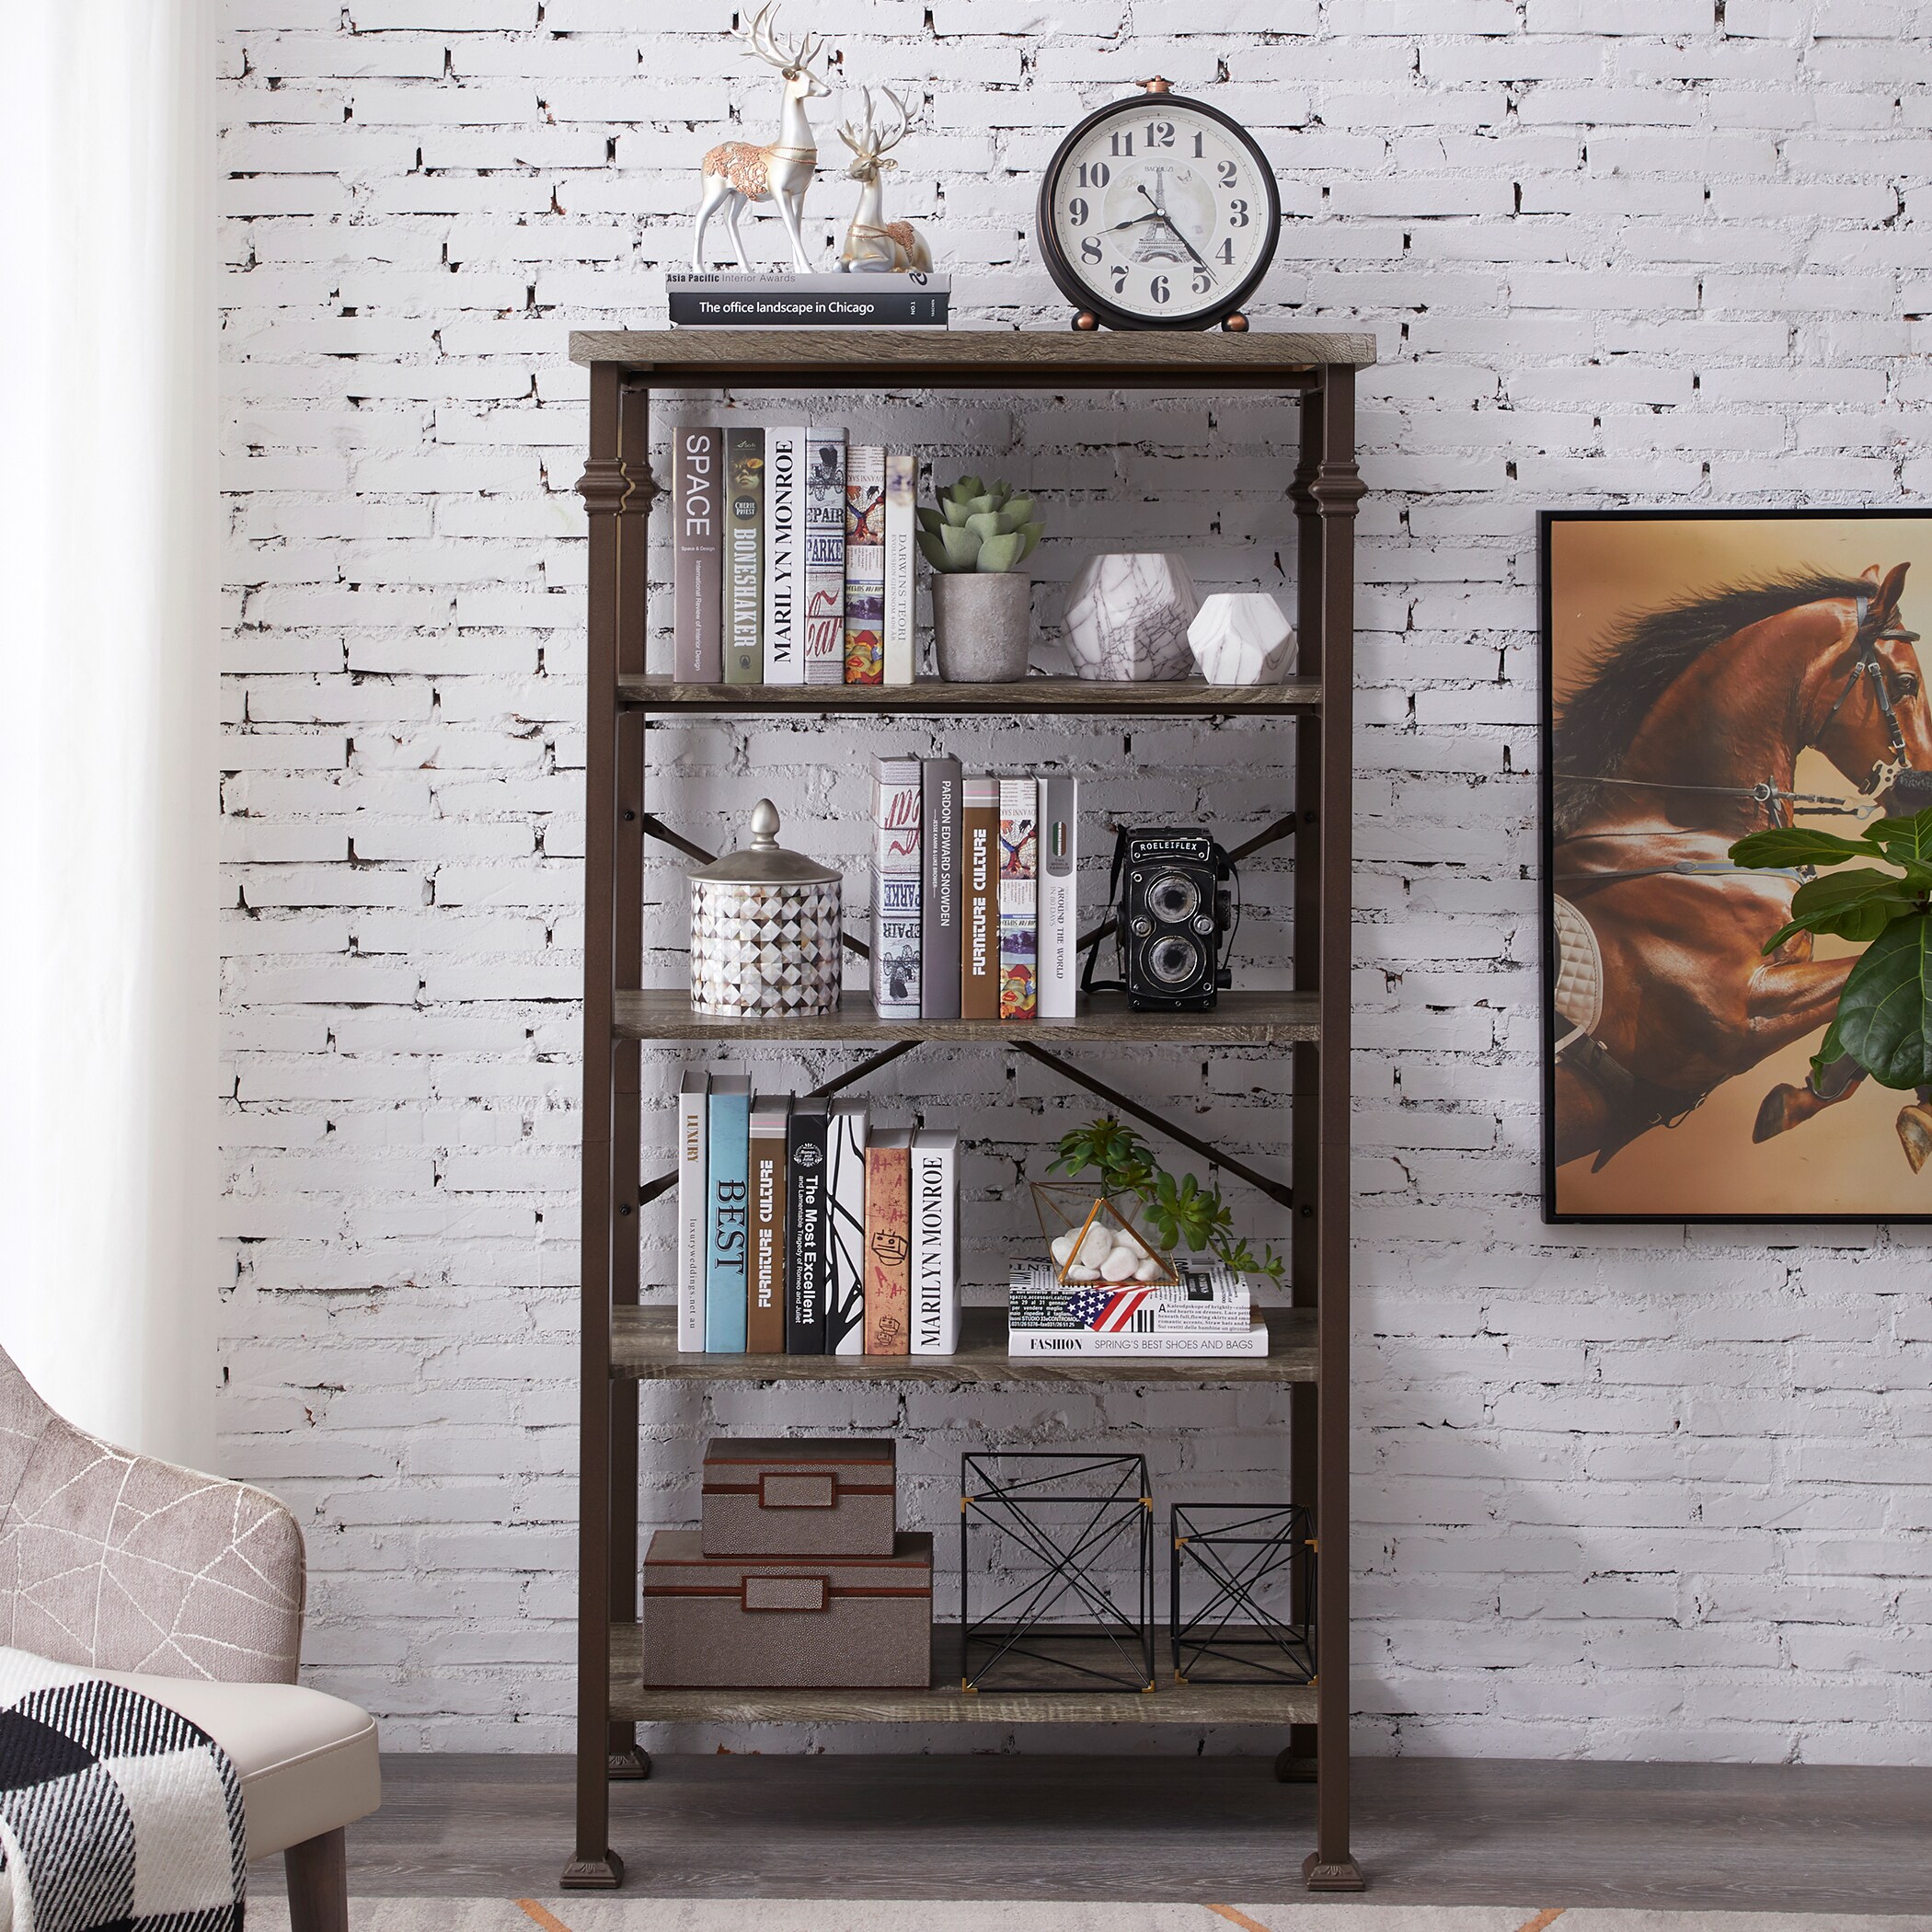 Details about   Dark Brown Oak Wooden 5 Shelf Bookcase Bookshelf Book Case Elegant Display Decor 